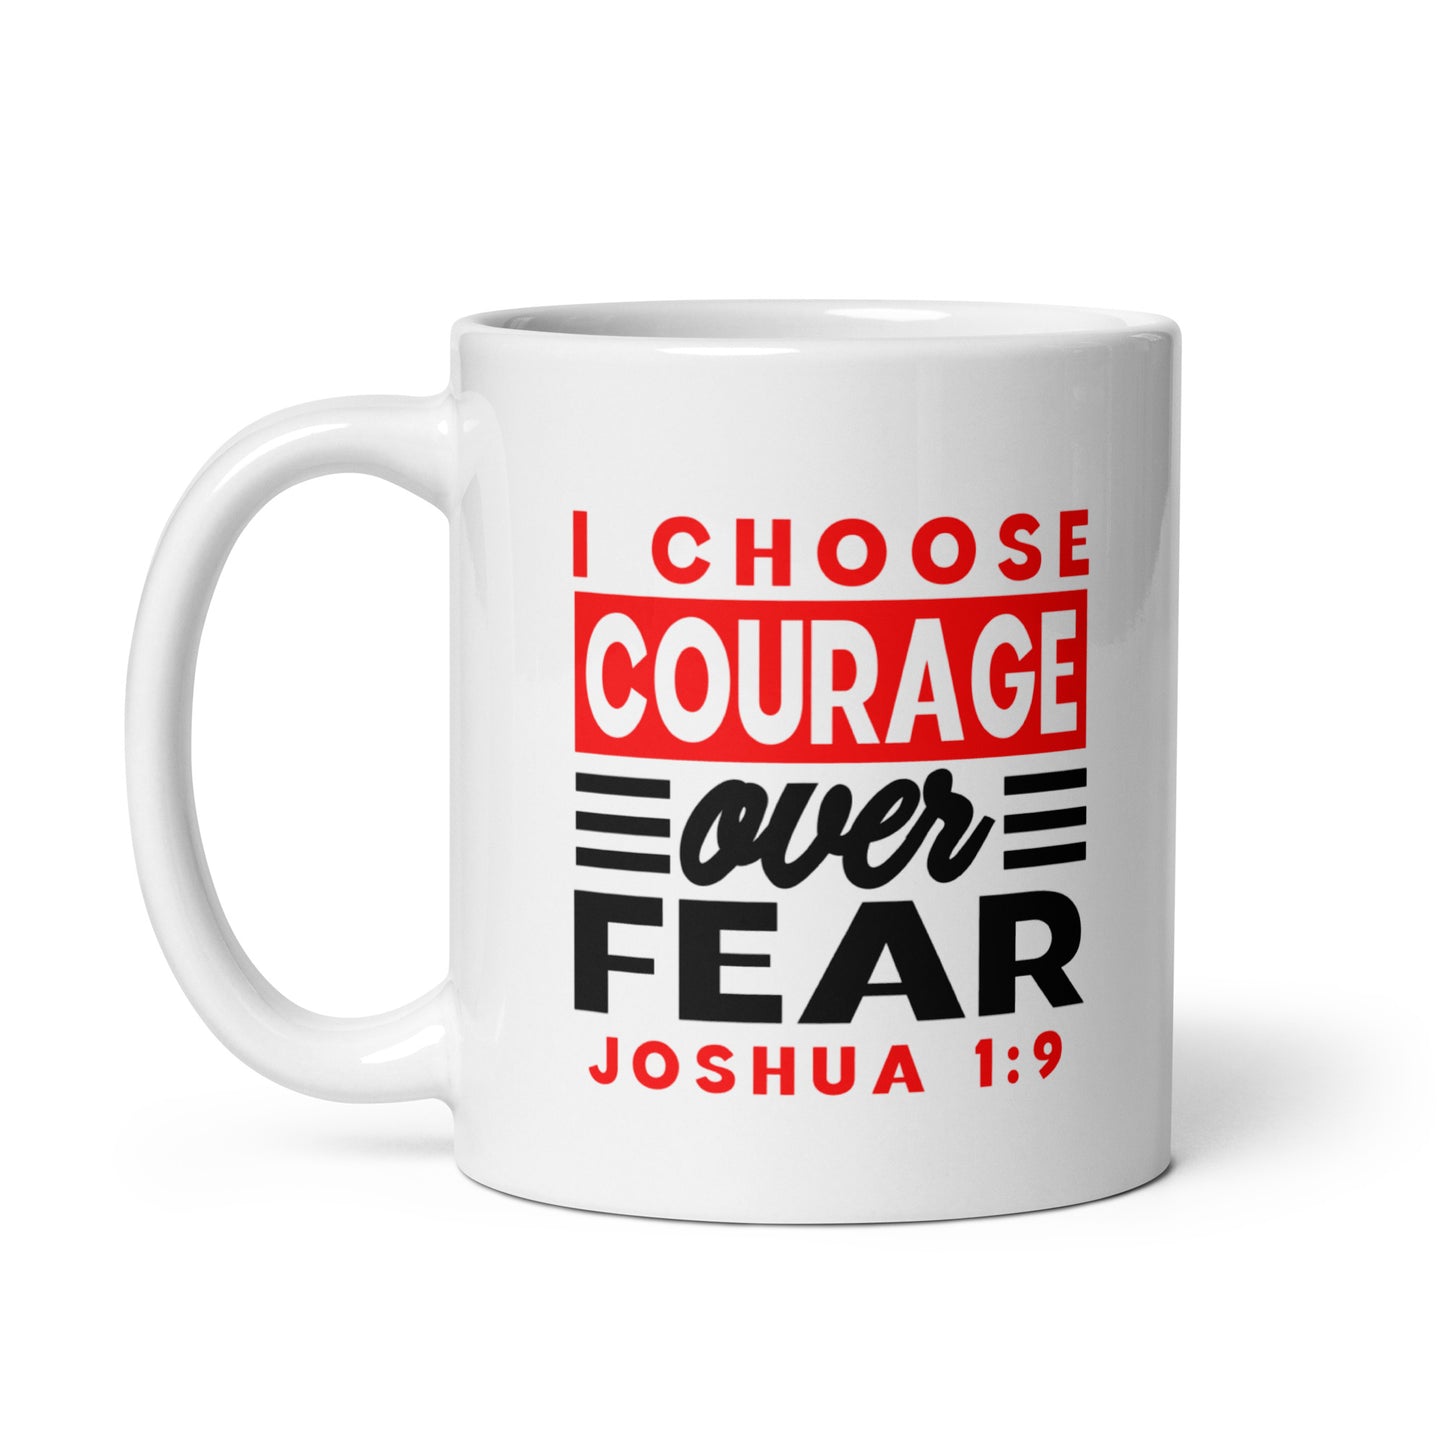 I Choose Courage Over Fear Mug